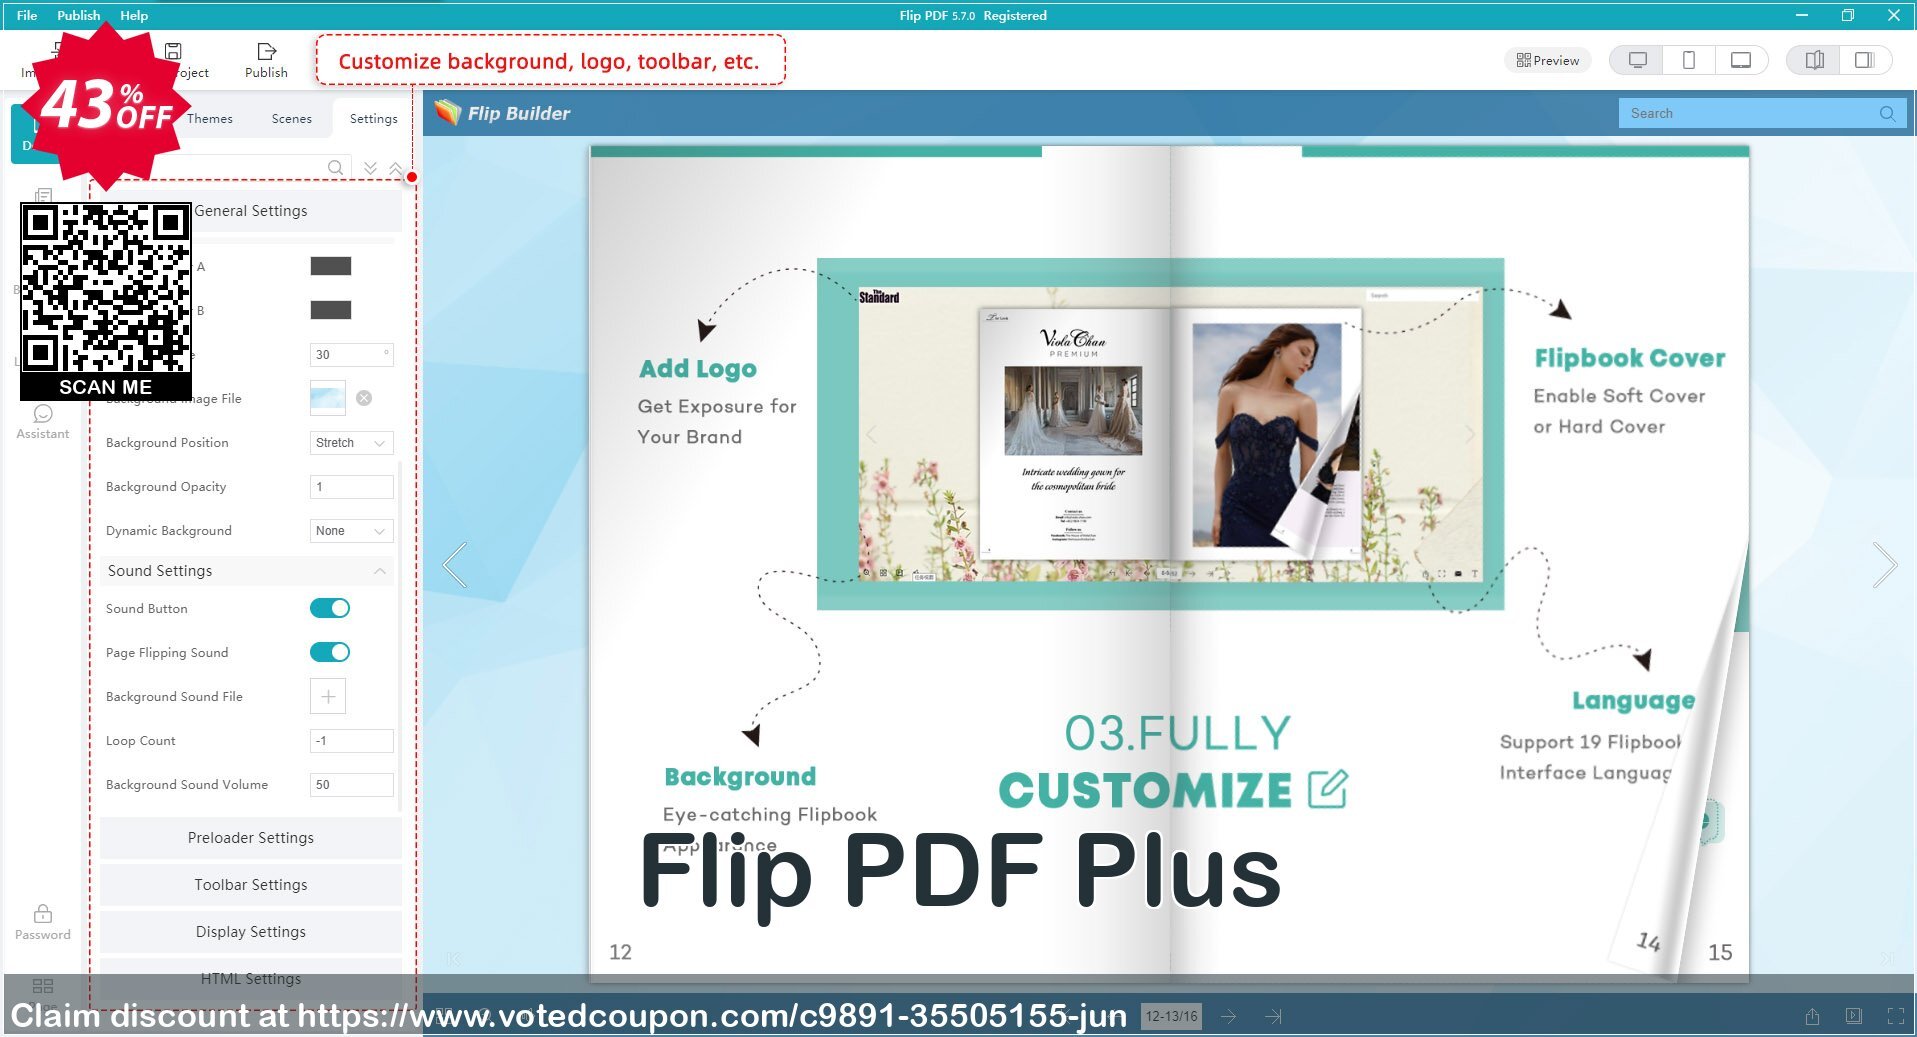 Flip PDF Plus